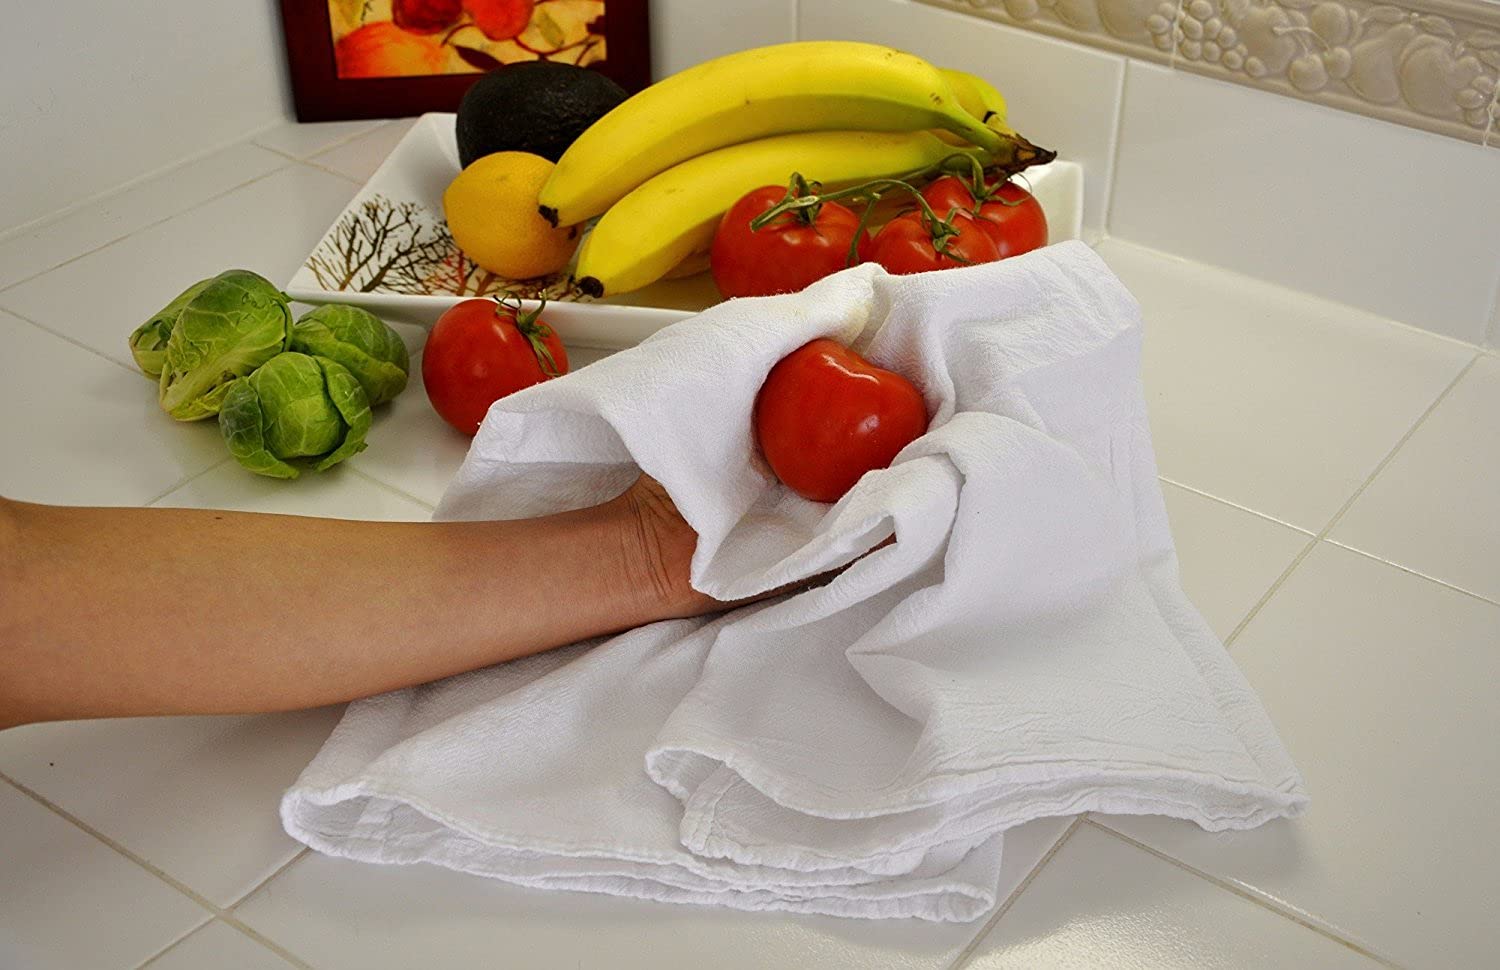 [18 Pack] Flour Sack Kitchen Dish Towels - Lint Free Soft 100% Ring Spun Cotton - Large 28x28 - White